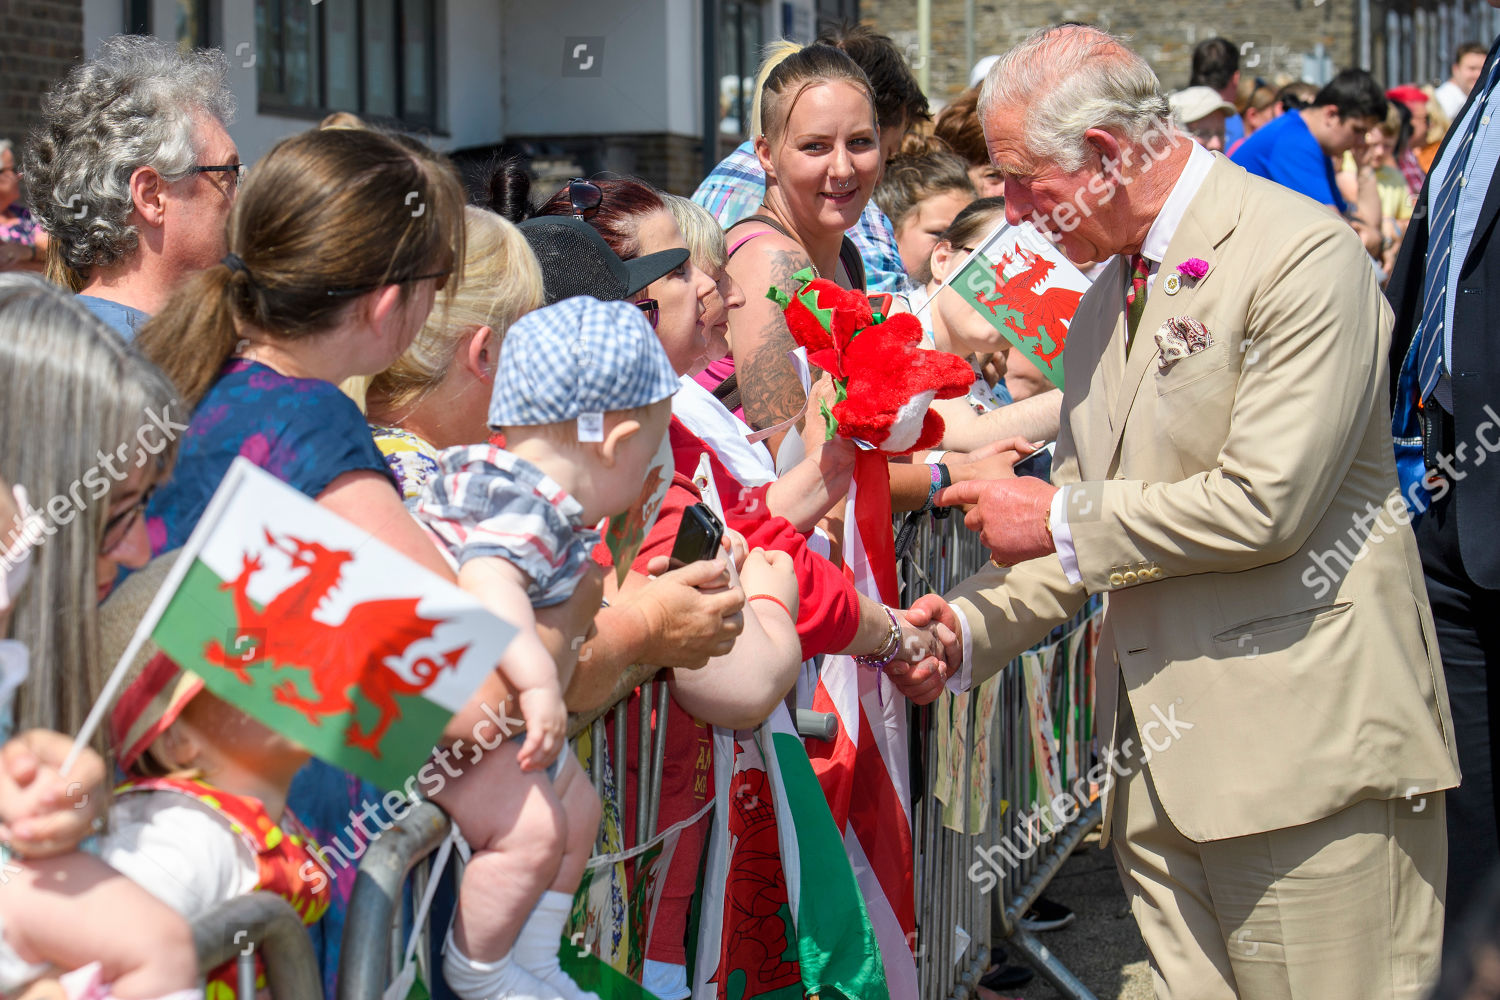 prince-charles-and-camilla-duchess-of-cornwall-visit-to-wales-uk-shutterstock-editorial-10327726at.jpg